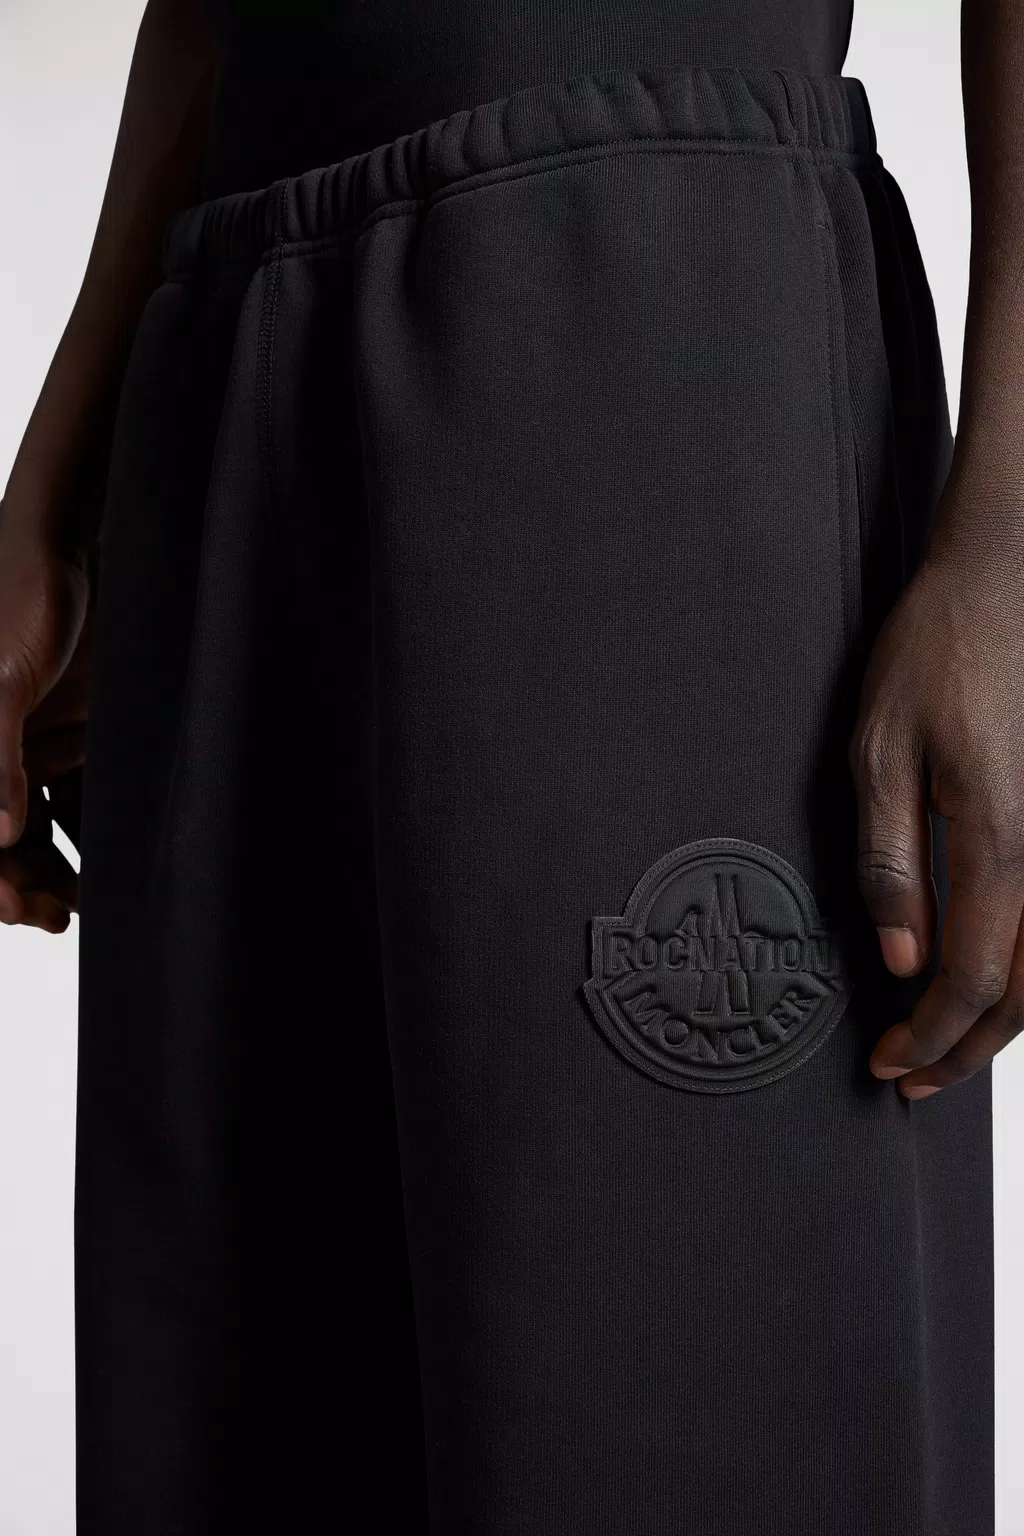 Black Logo Sweatpants - Moncler x Roc Nation designed by Jay-Z for ...